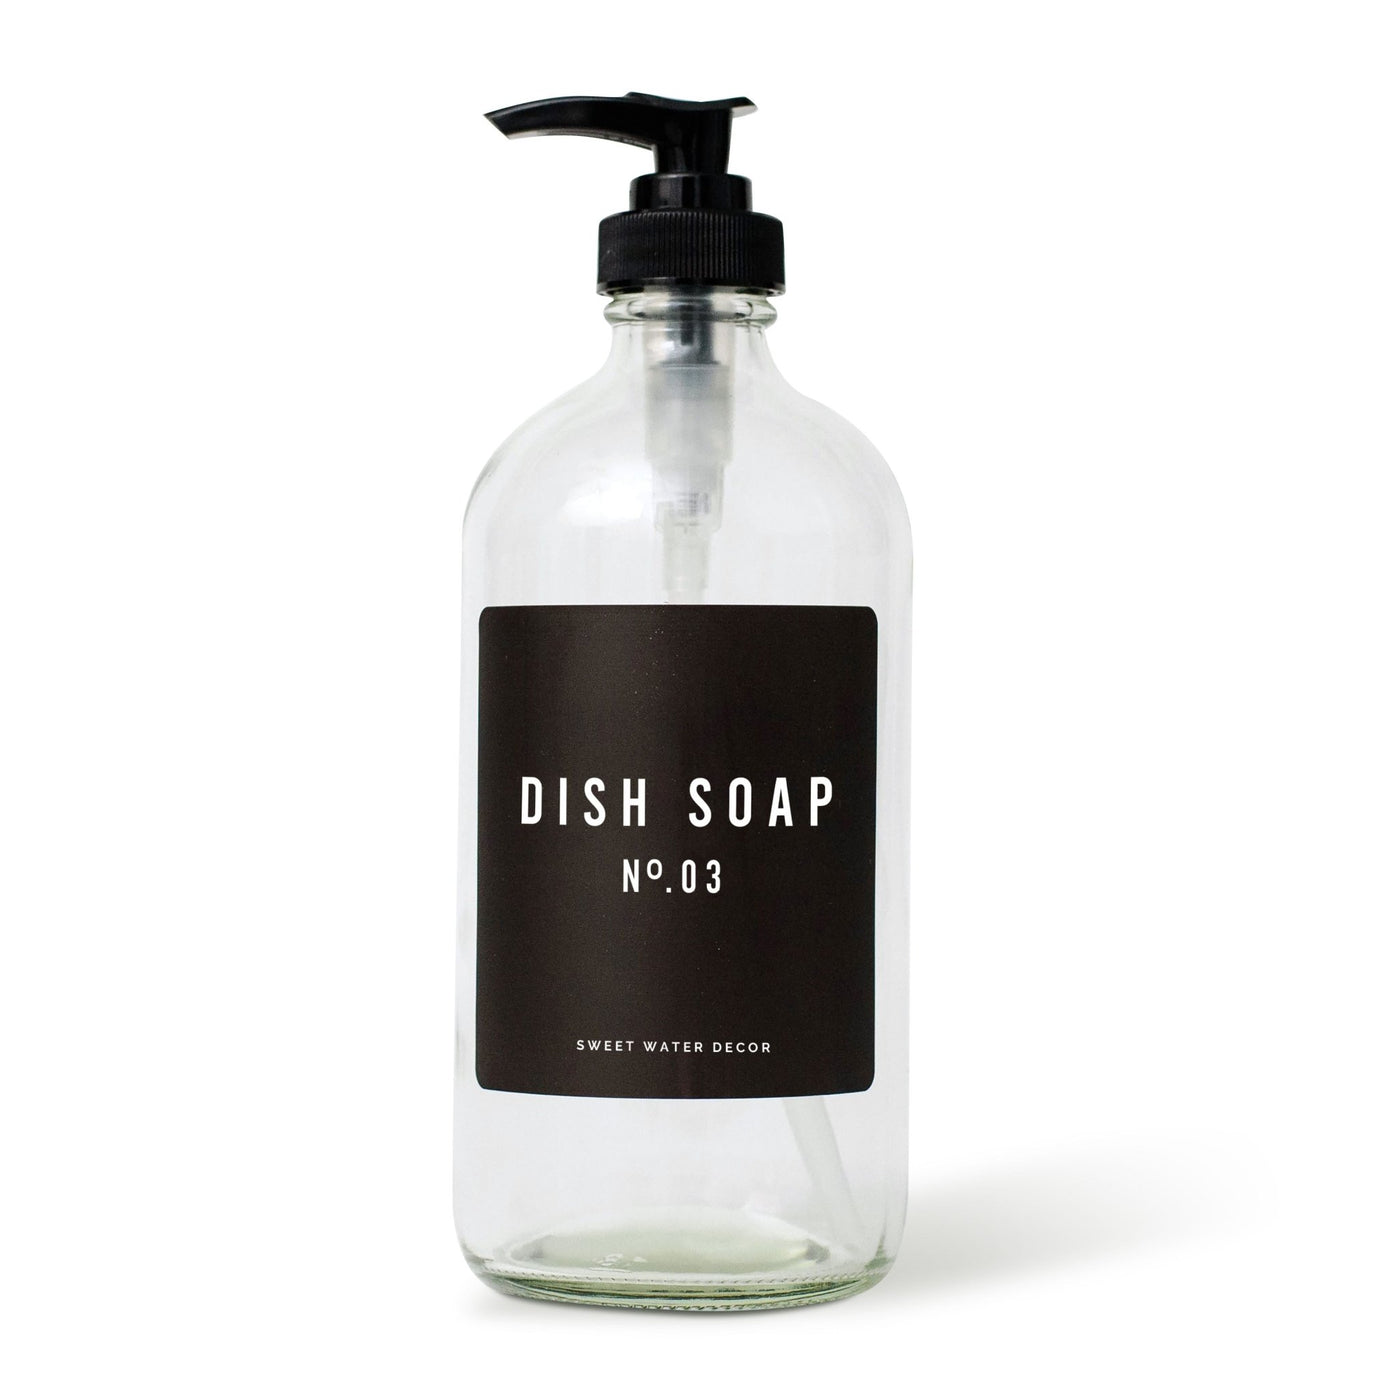 16oz Clear Glass Dish Soap Dispenser - Black Label - Sweet Water Decor - Dispensers